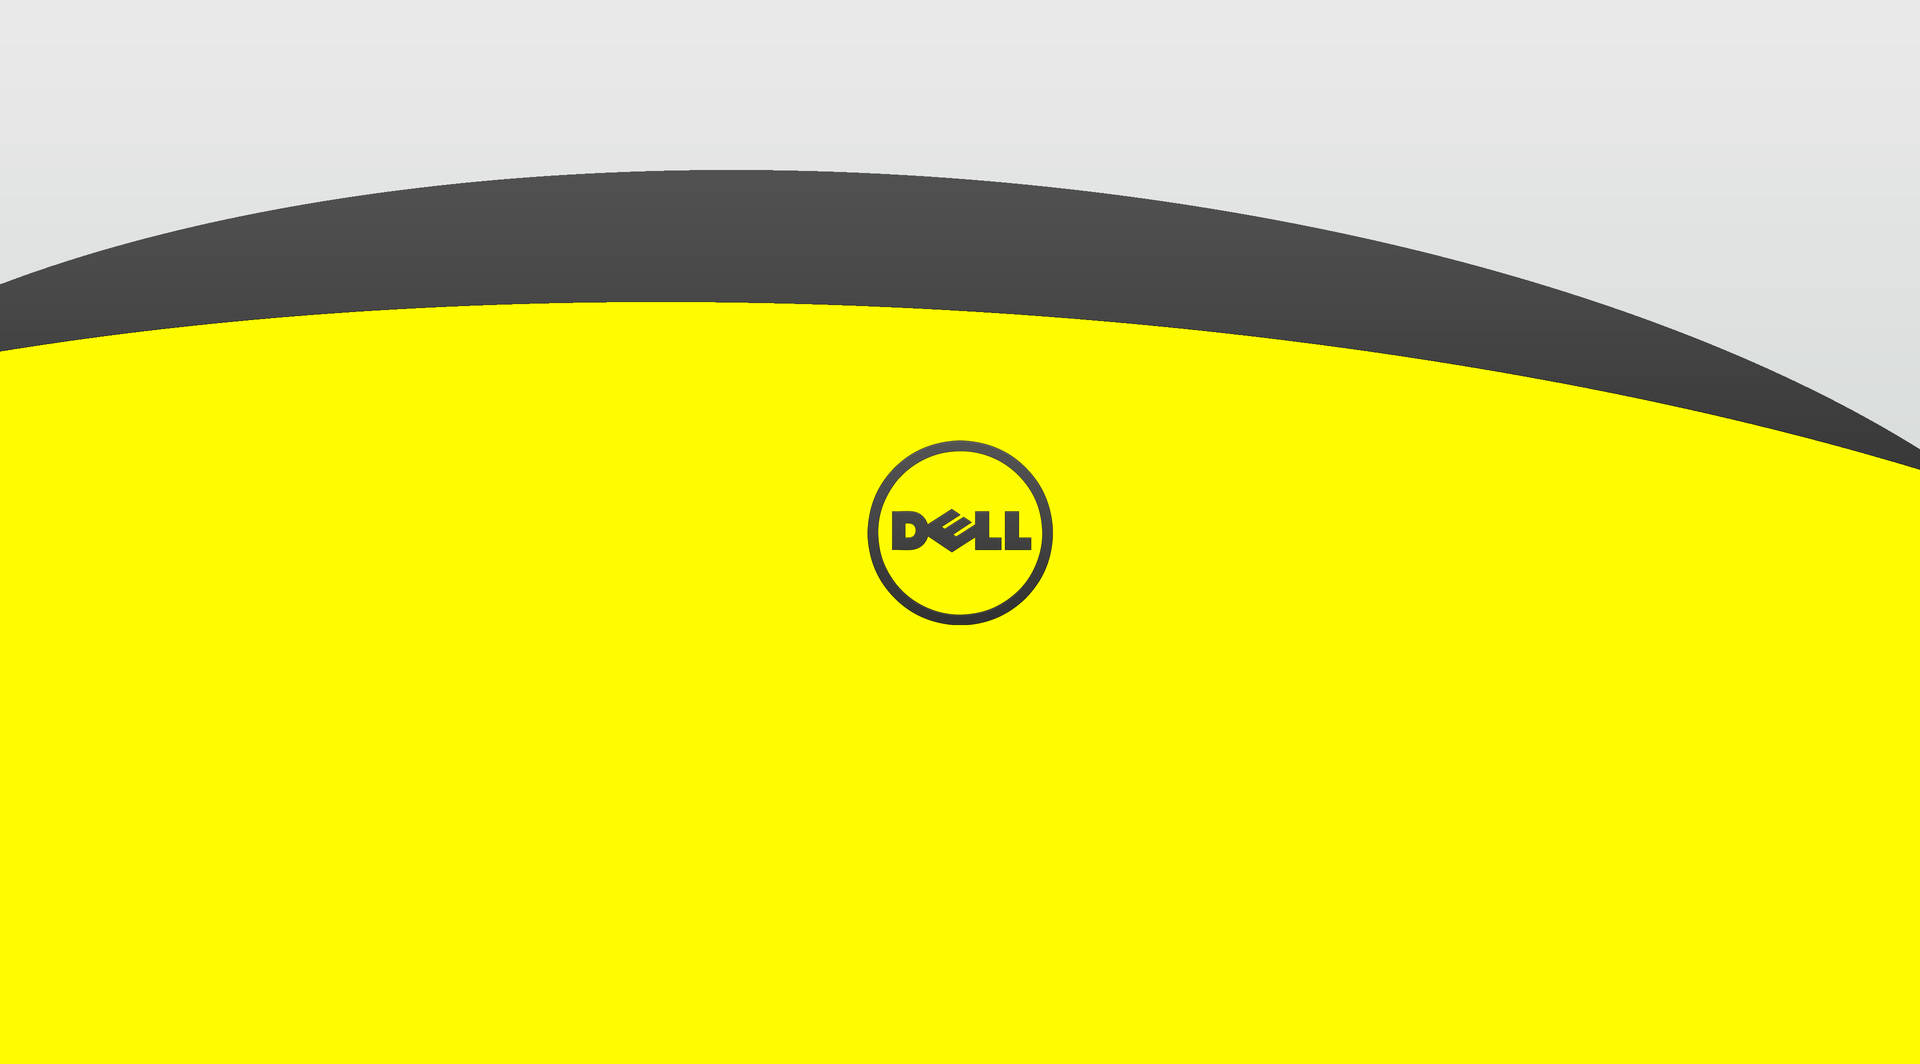 Dell 4k Logo On Yellow Wallpaper